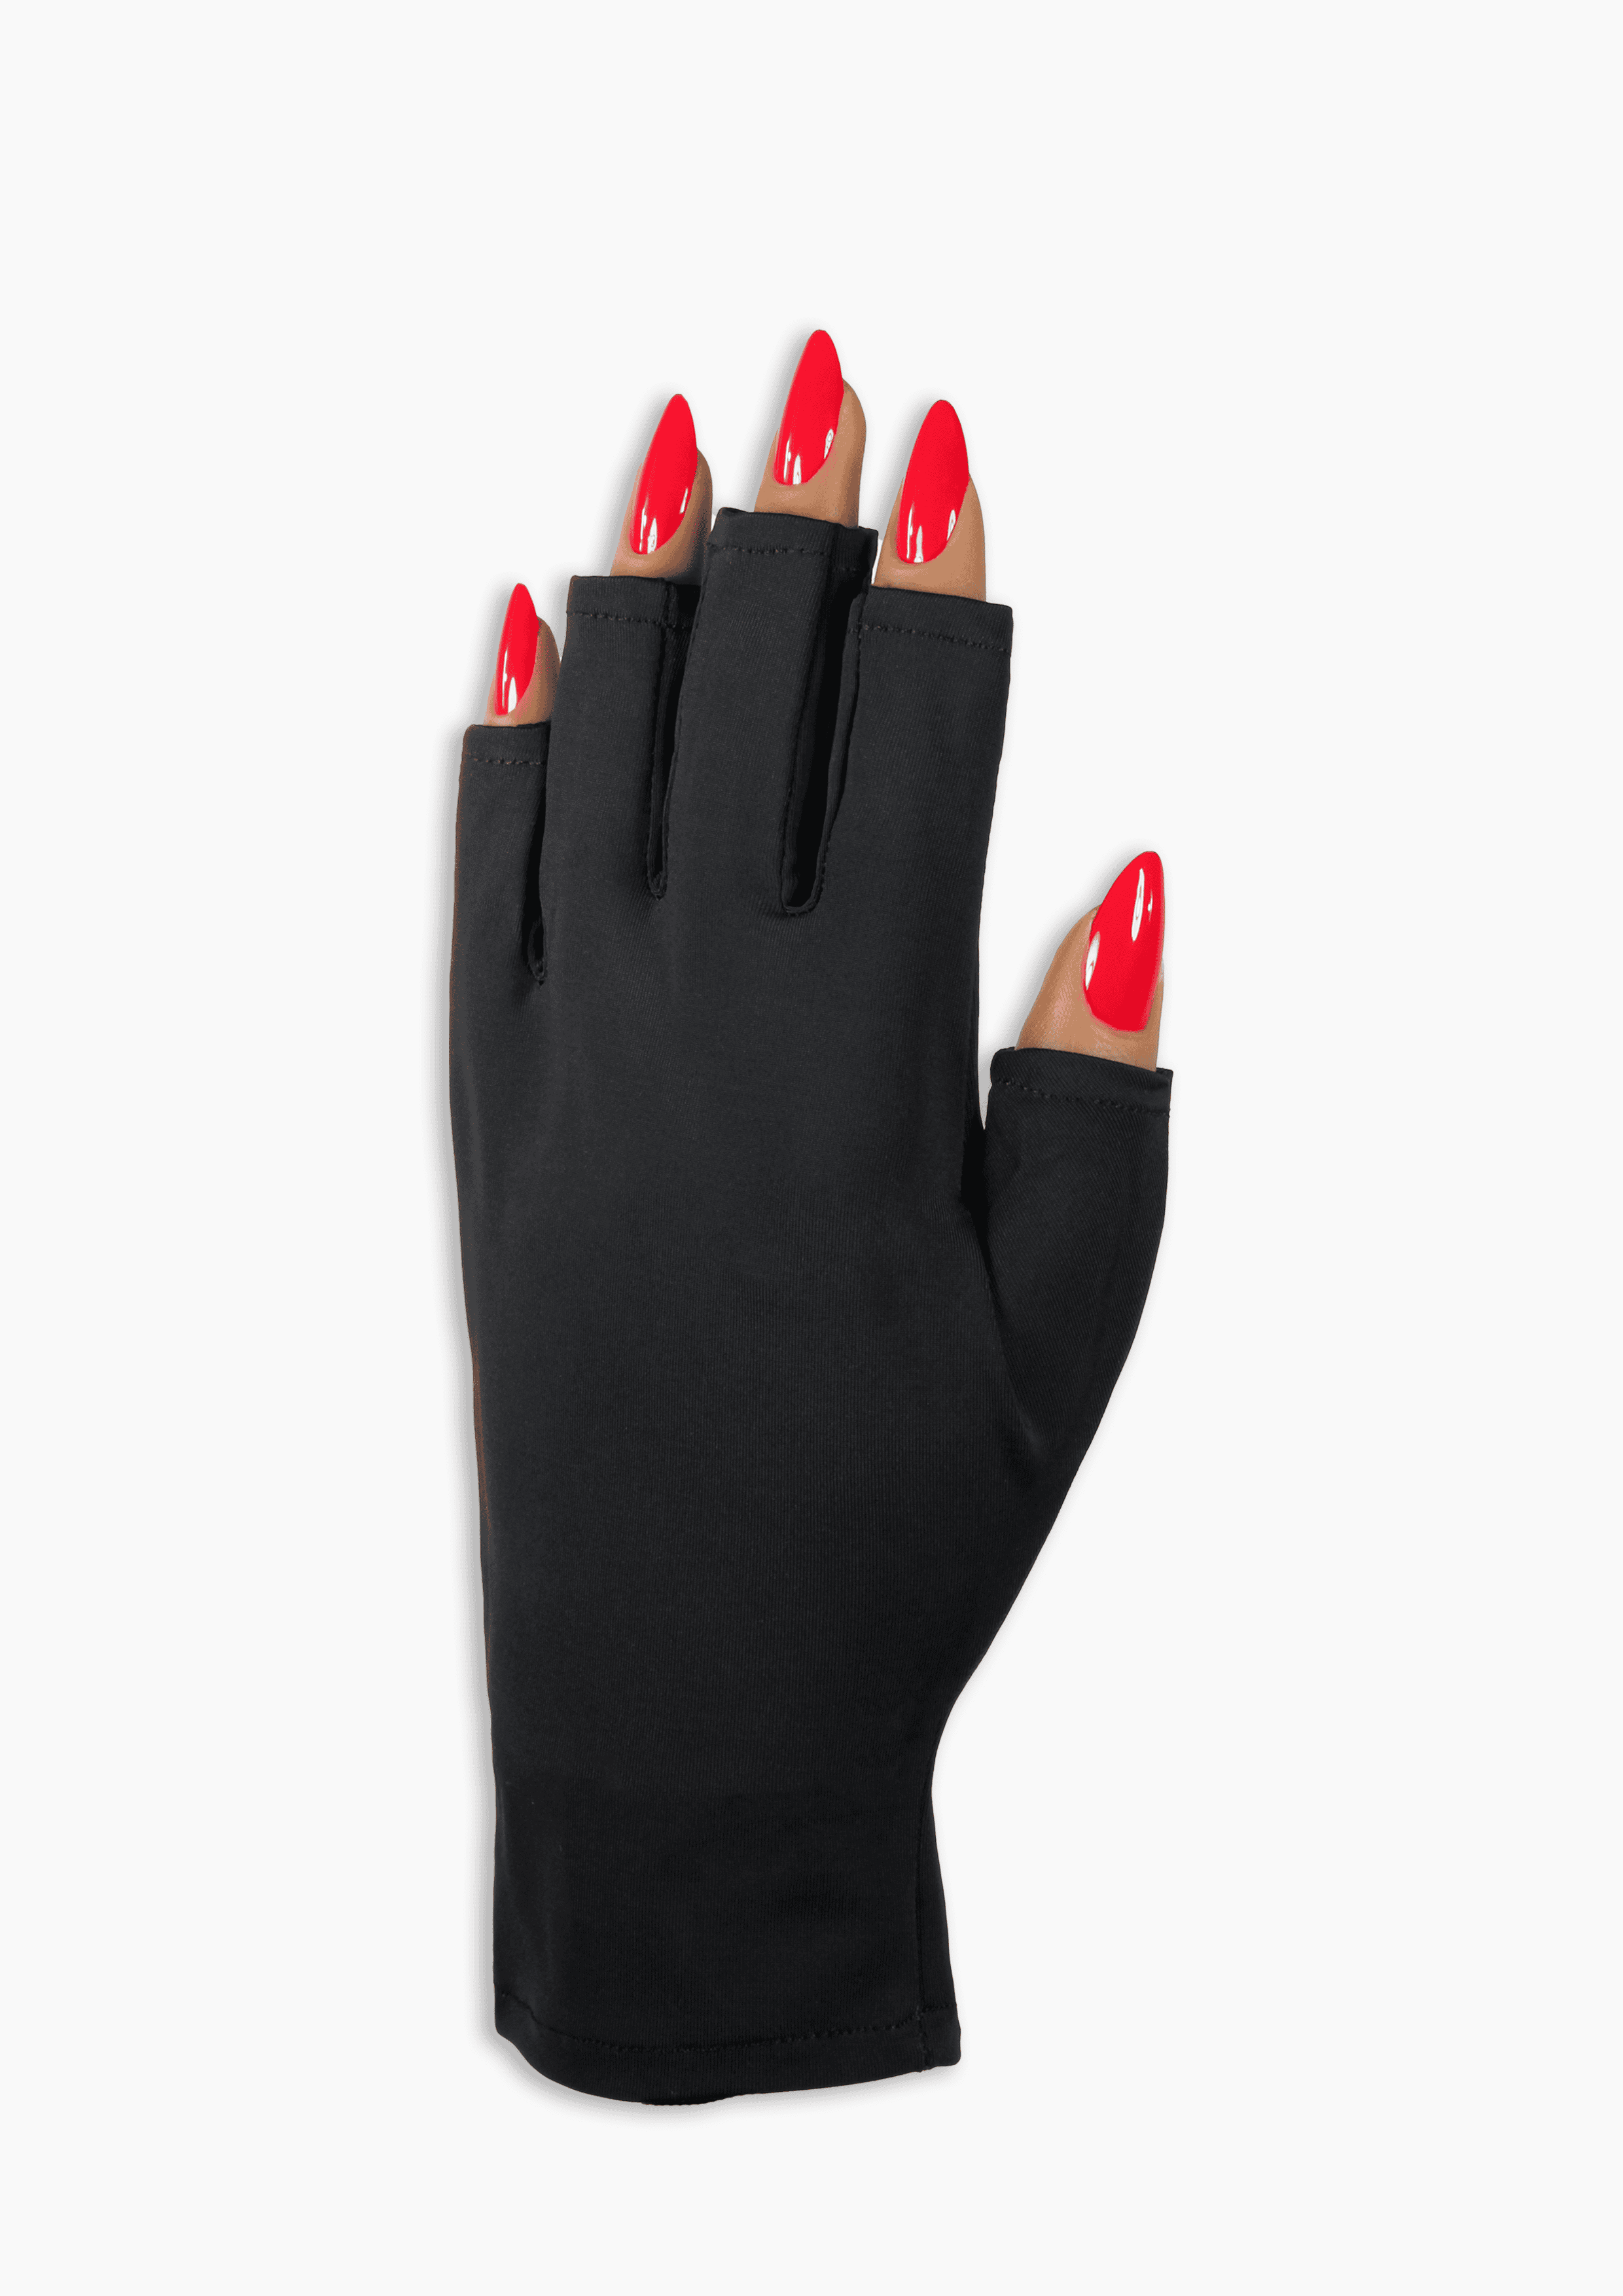 Manicure gloves